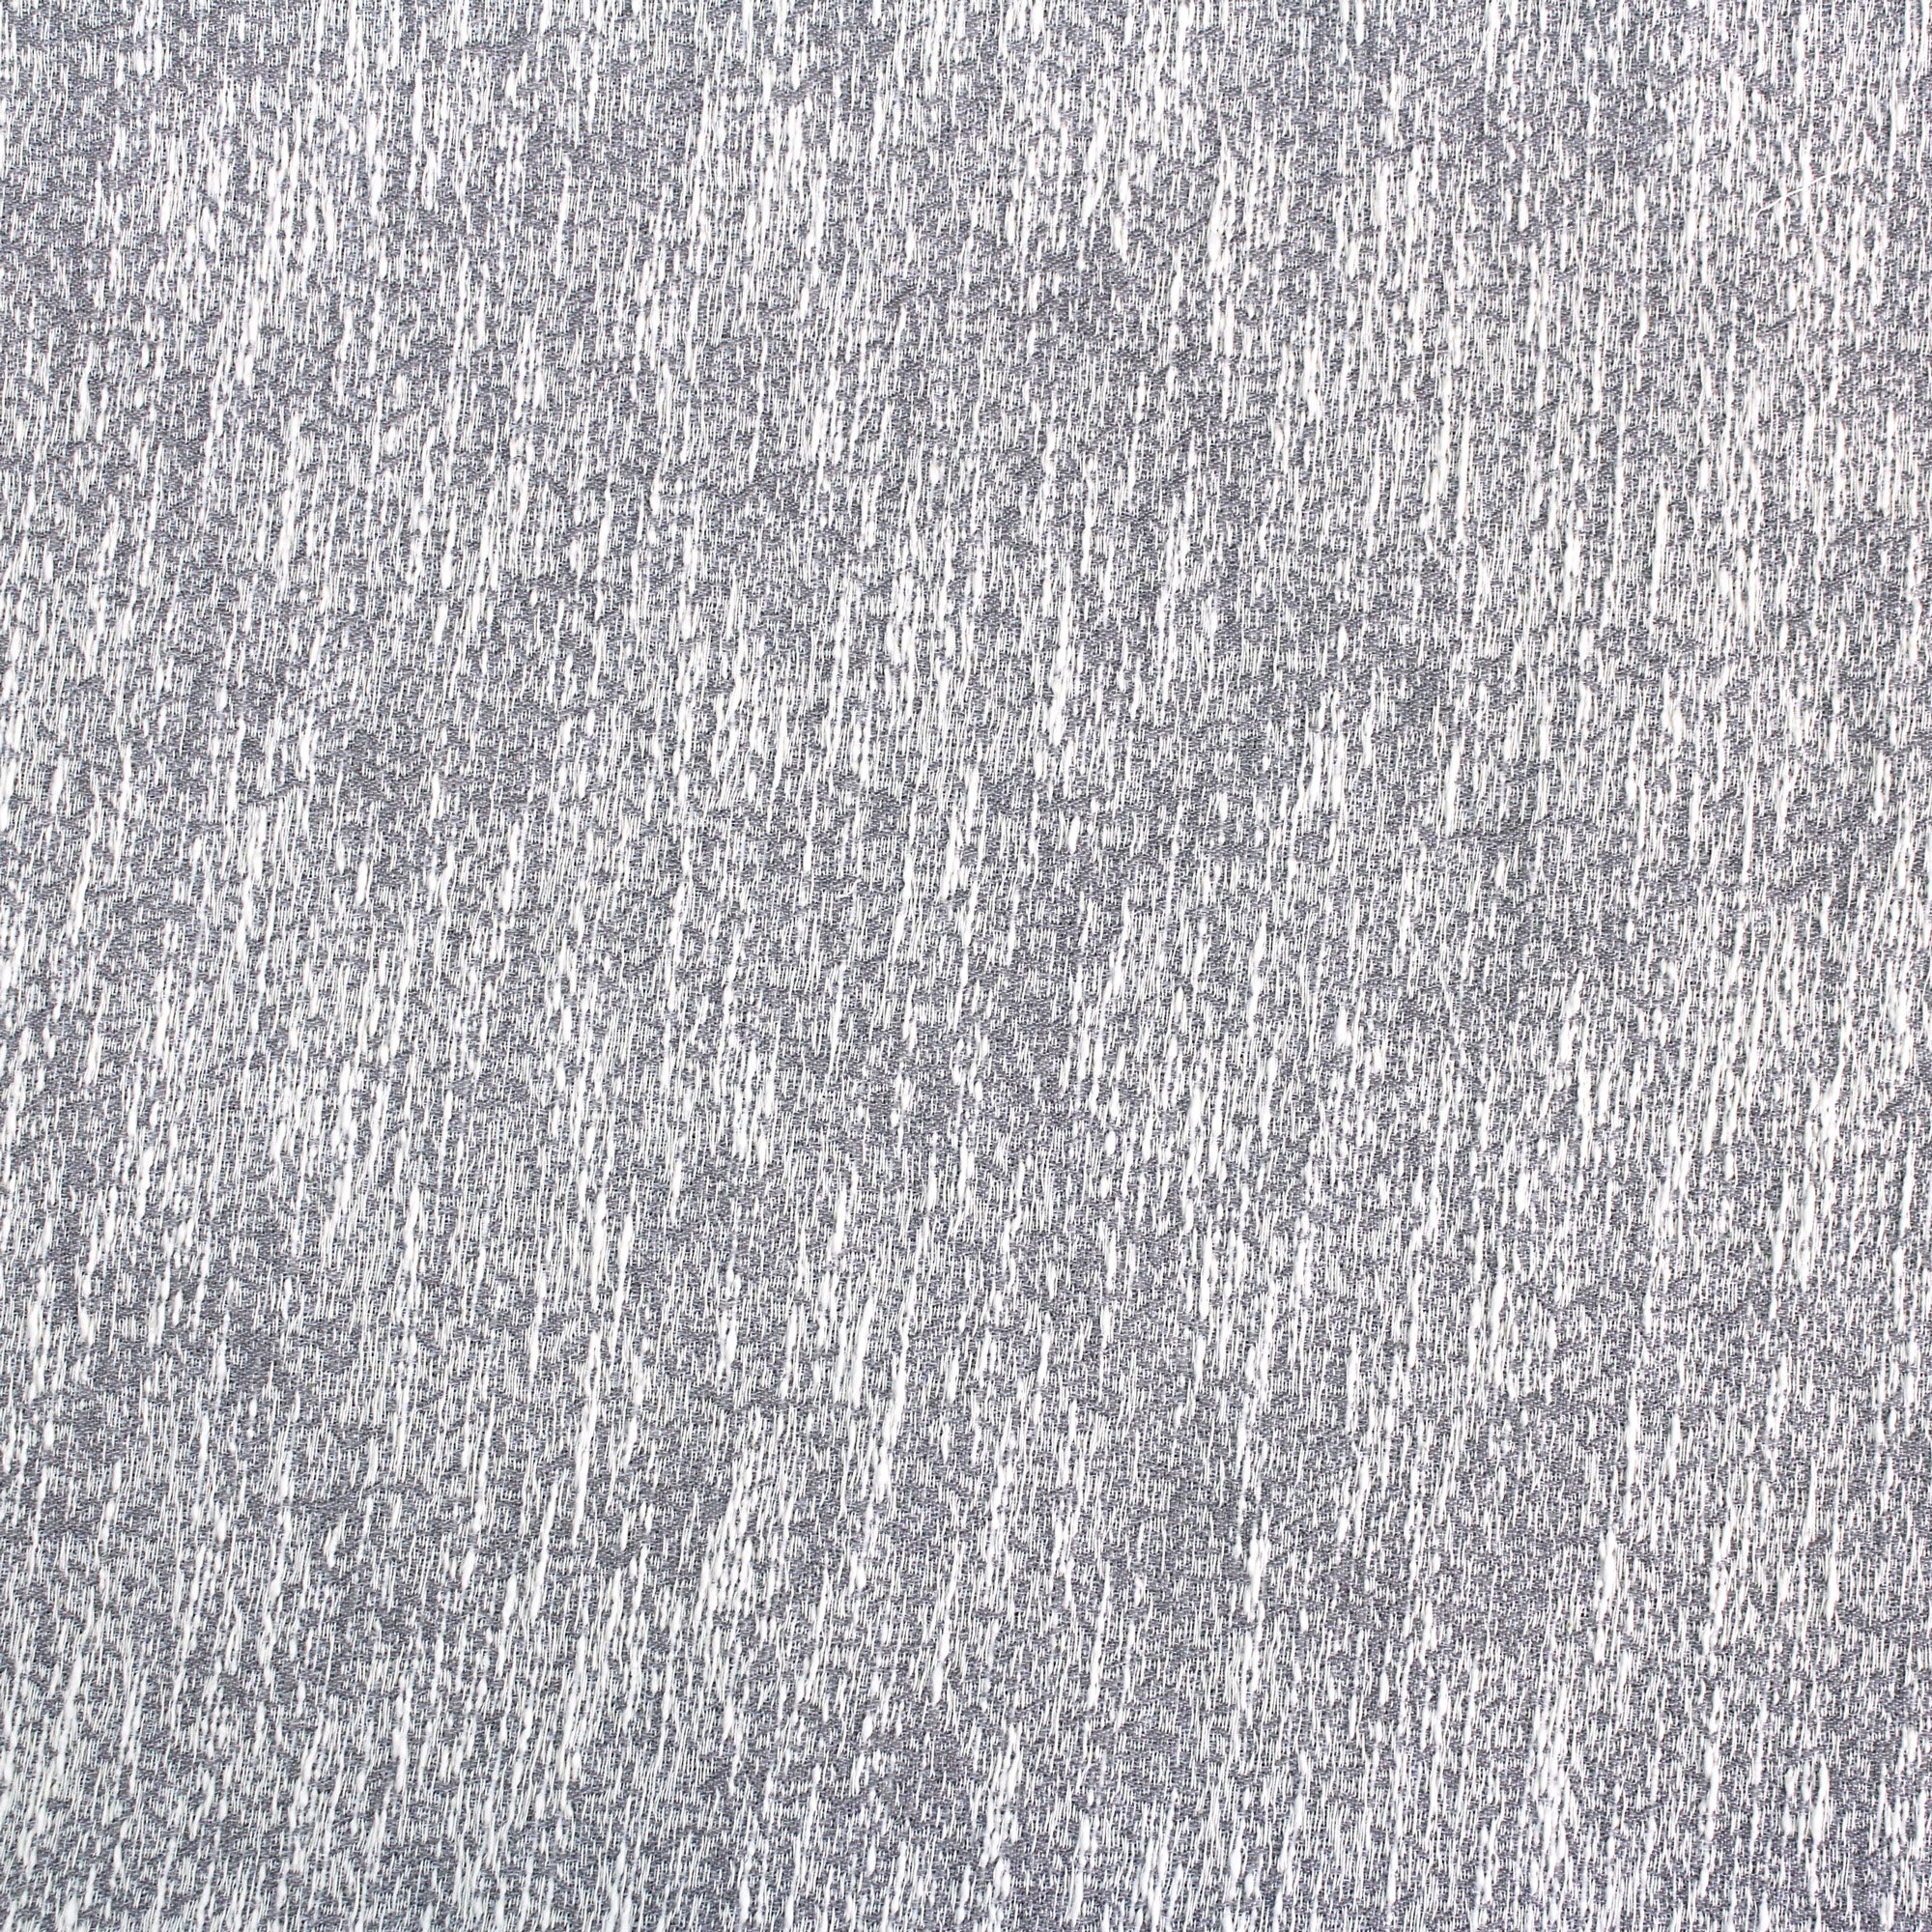 Gray and white cotton jacquard fabric